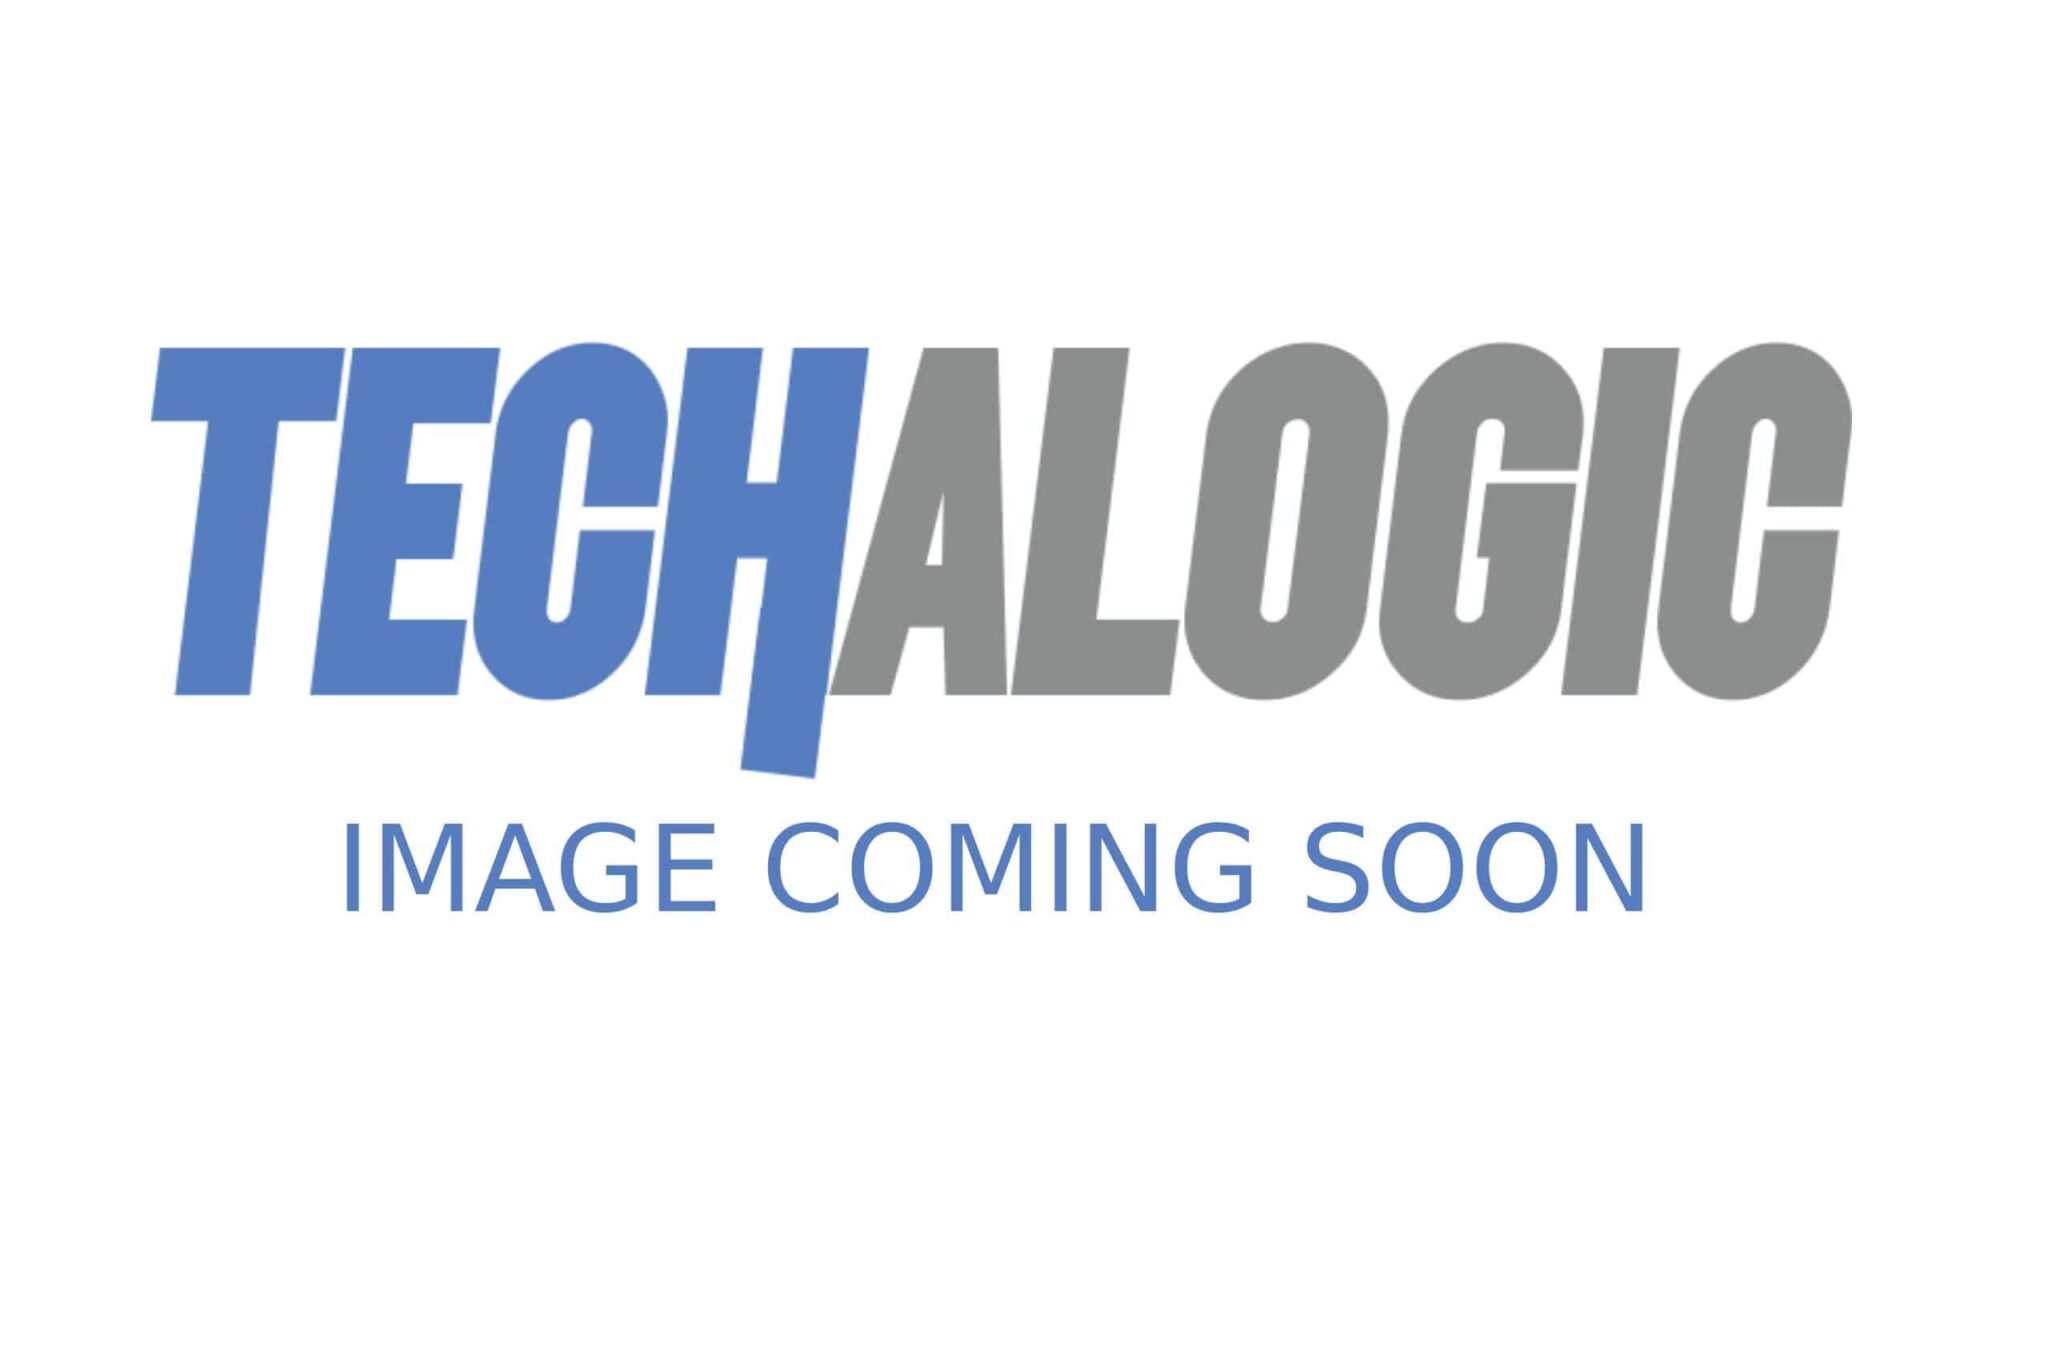 Techalogic | Product image coming soon